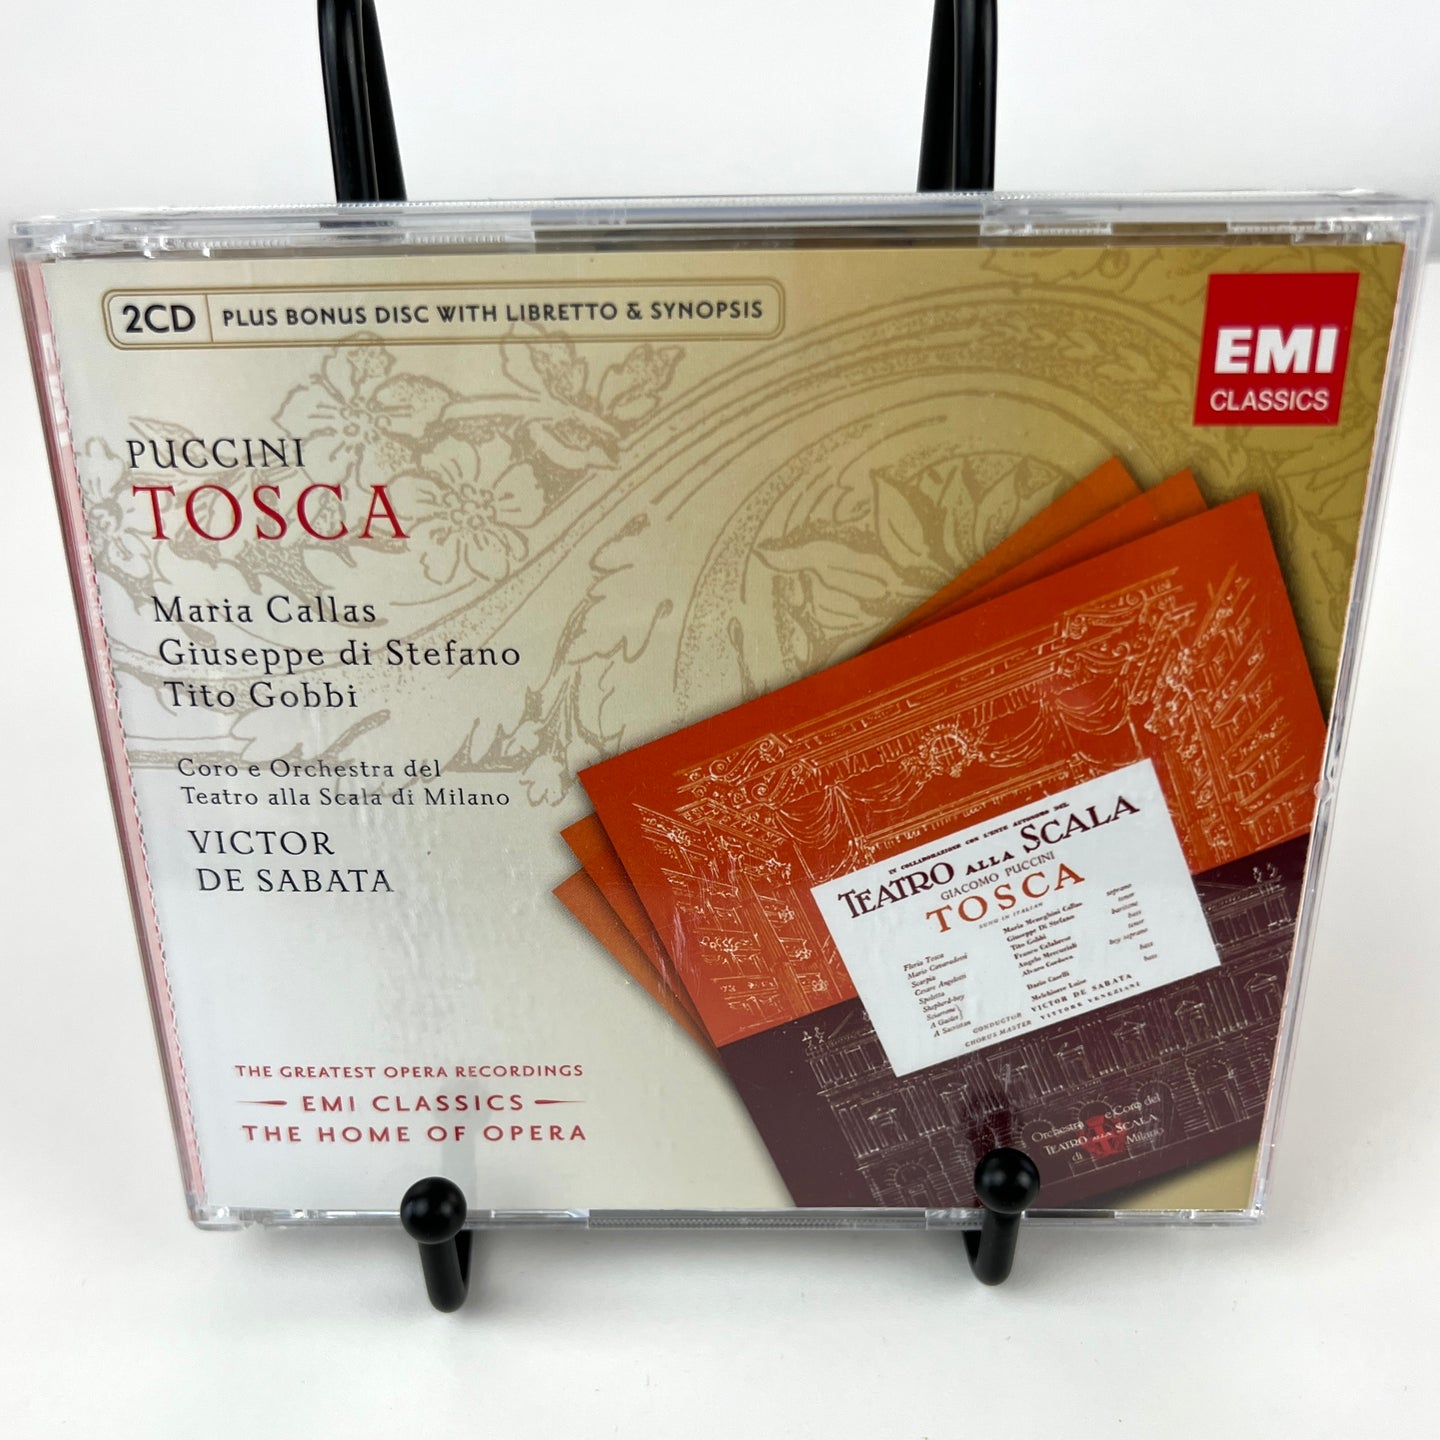 Puccini: Tosca 1953 Callas Di Stefano & Gobbi 2 CDs + Bonus Disc